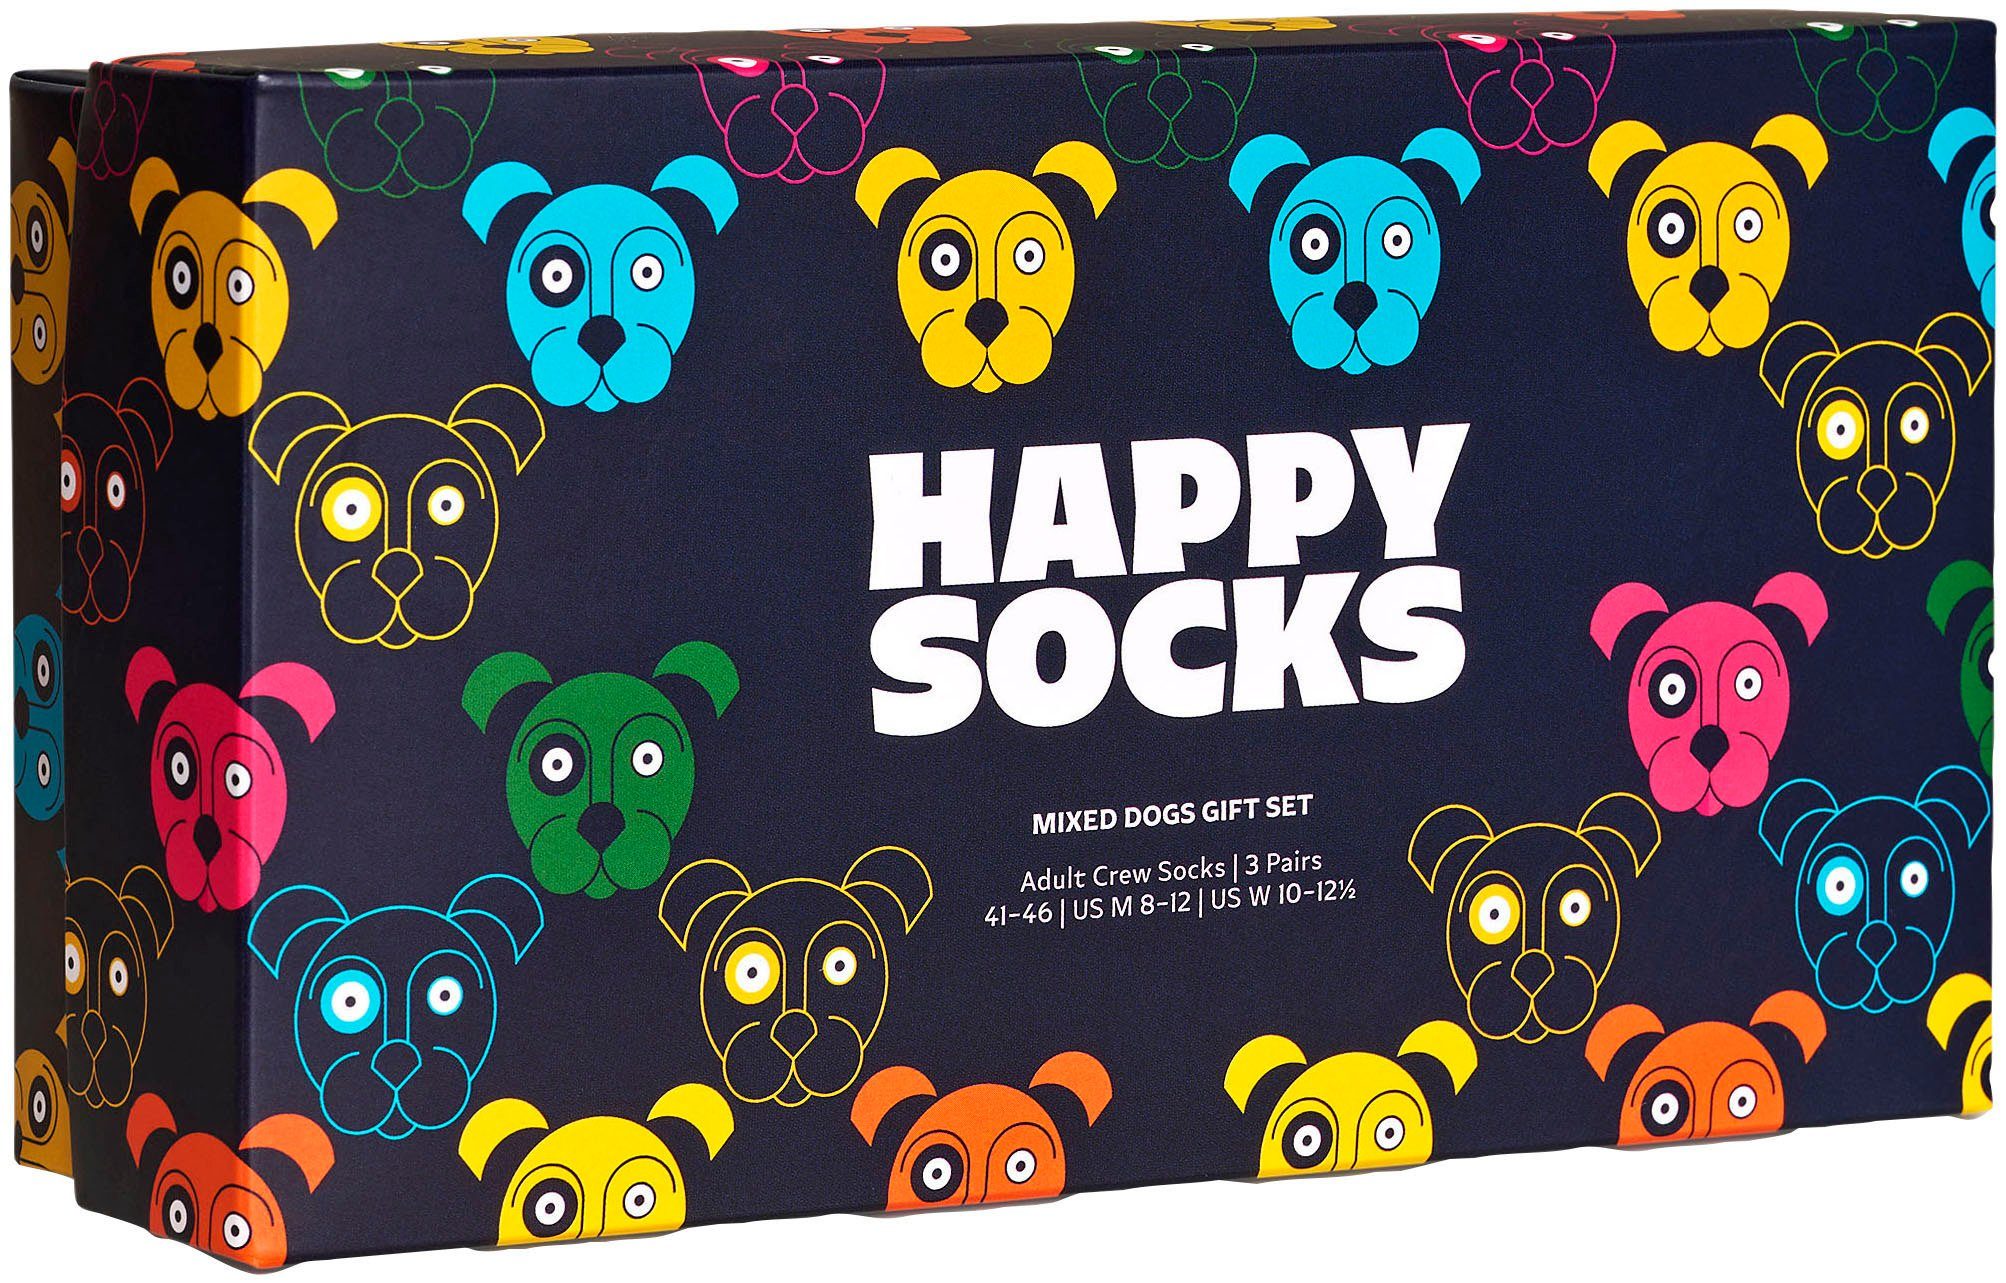 Mixed 2 Happy Hunde-Motiv Socks 3-Pack (Packung) Set Gift Socks Dog Socken Mixed Dog